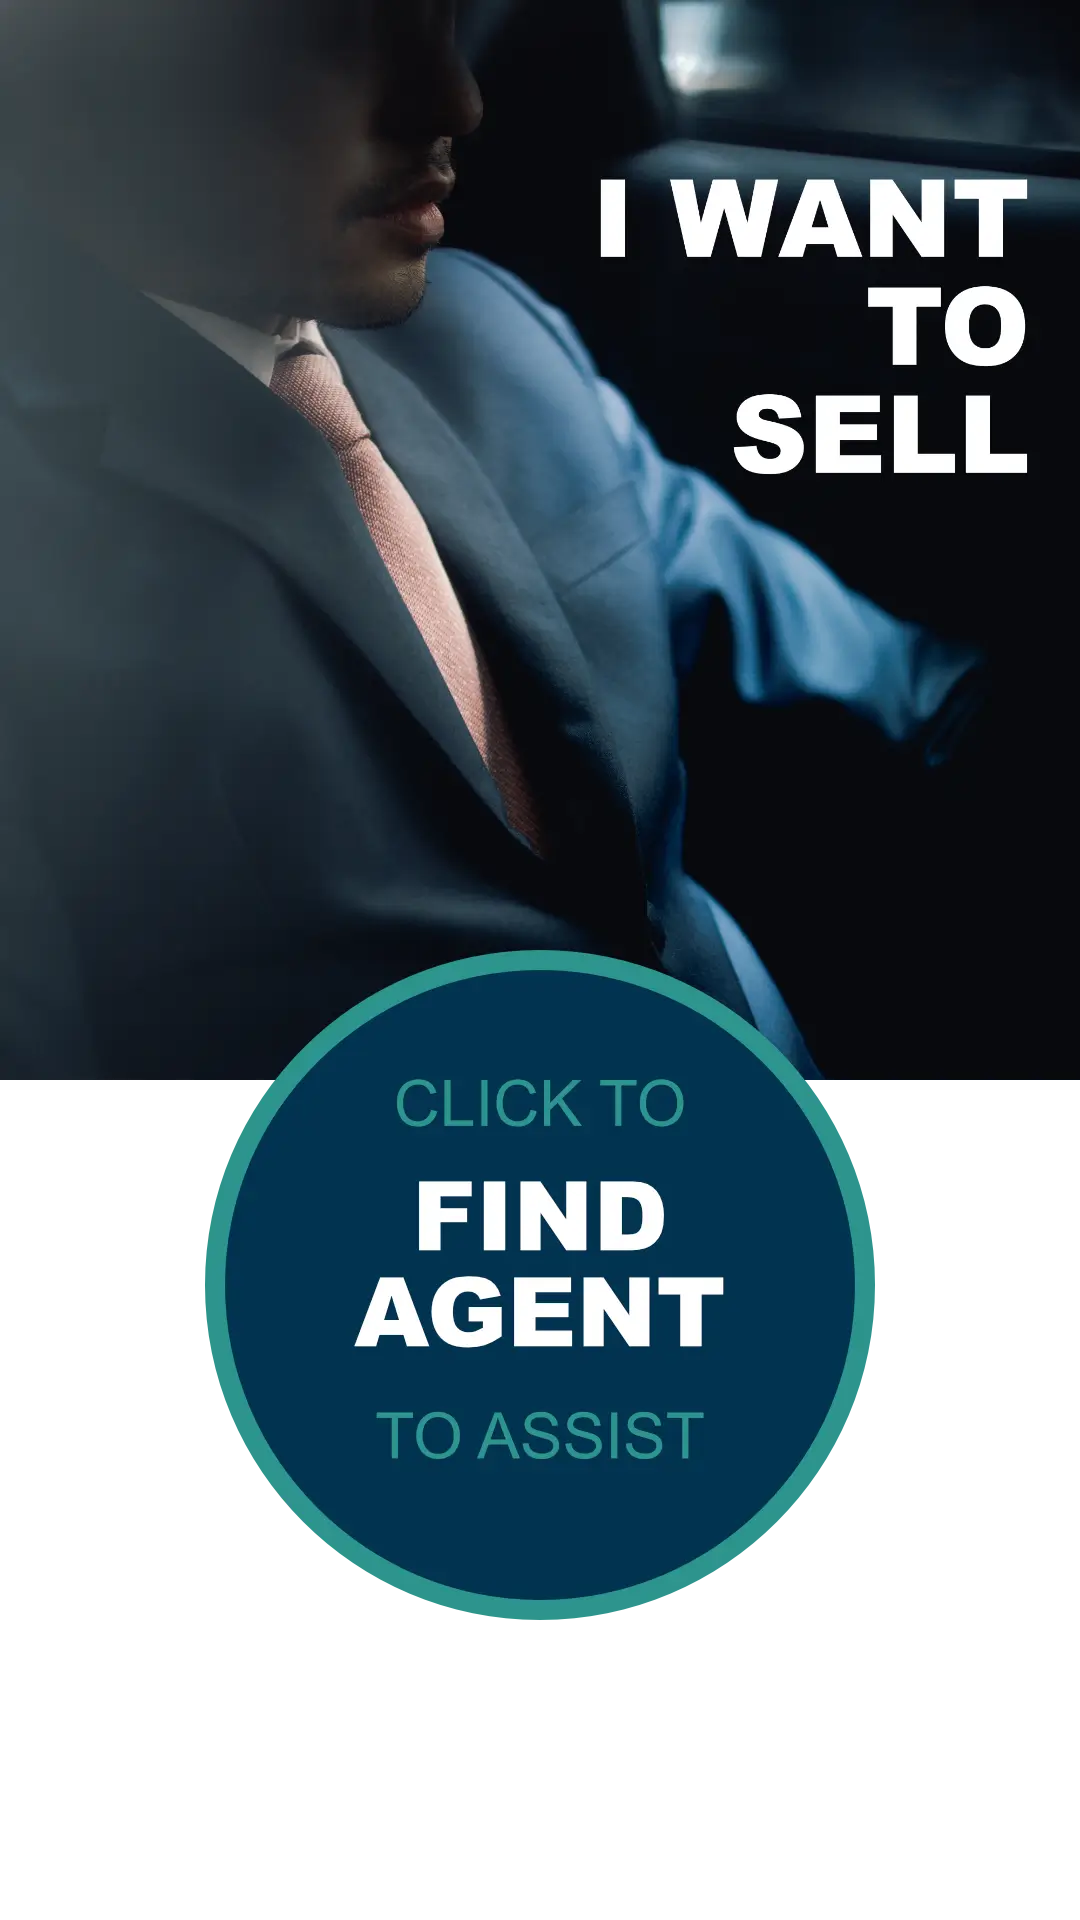 Find an agent